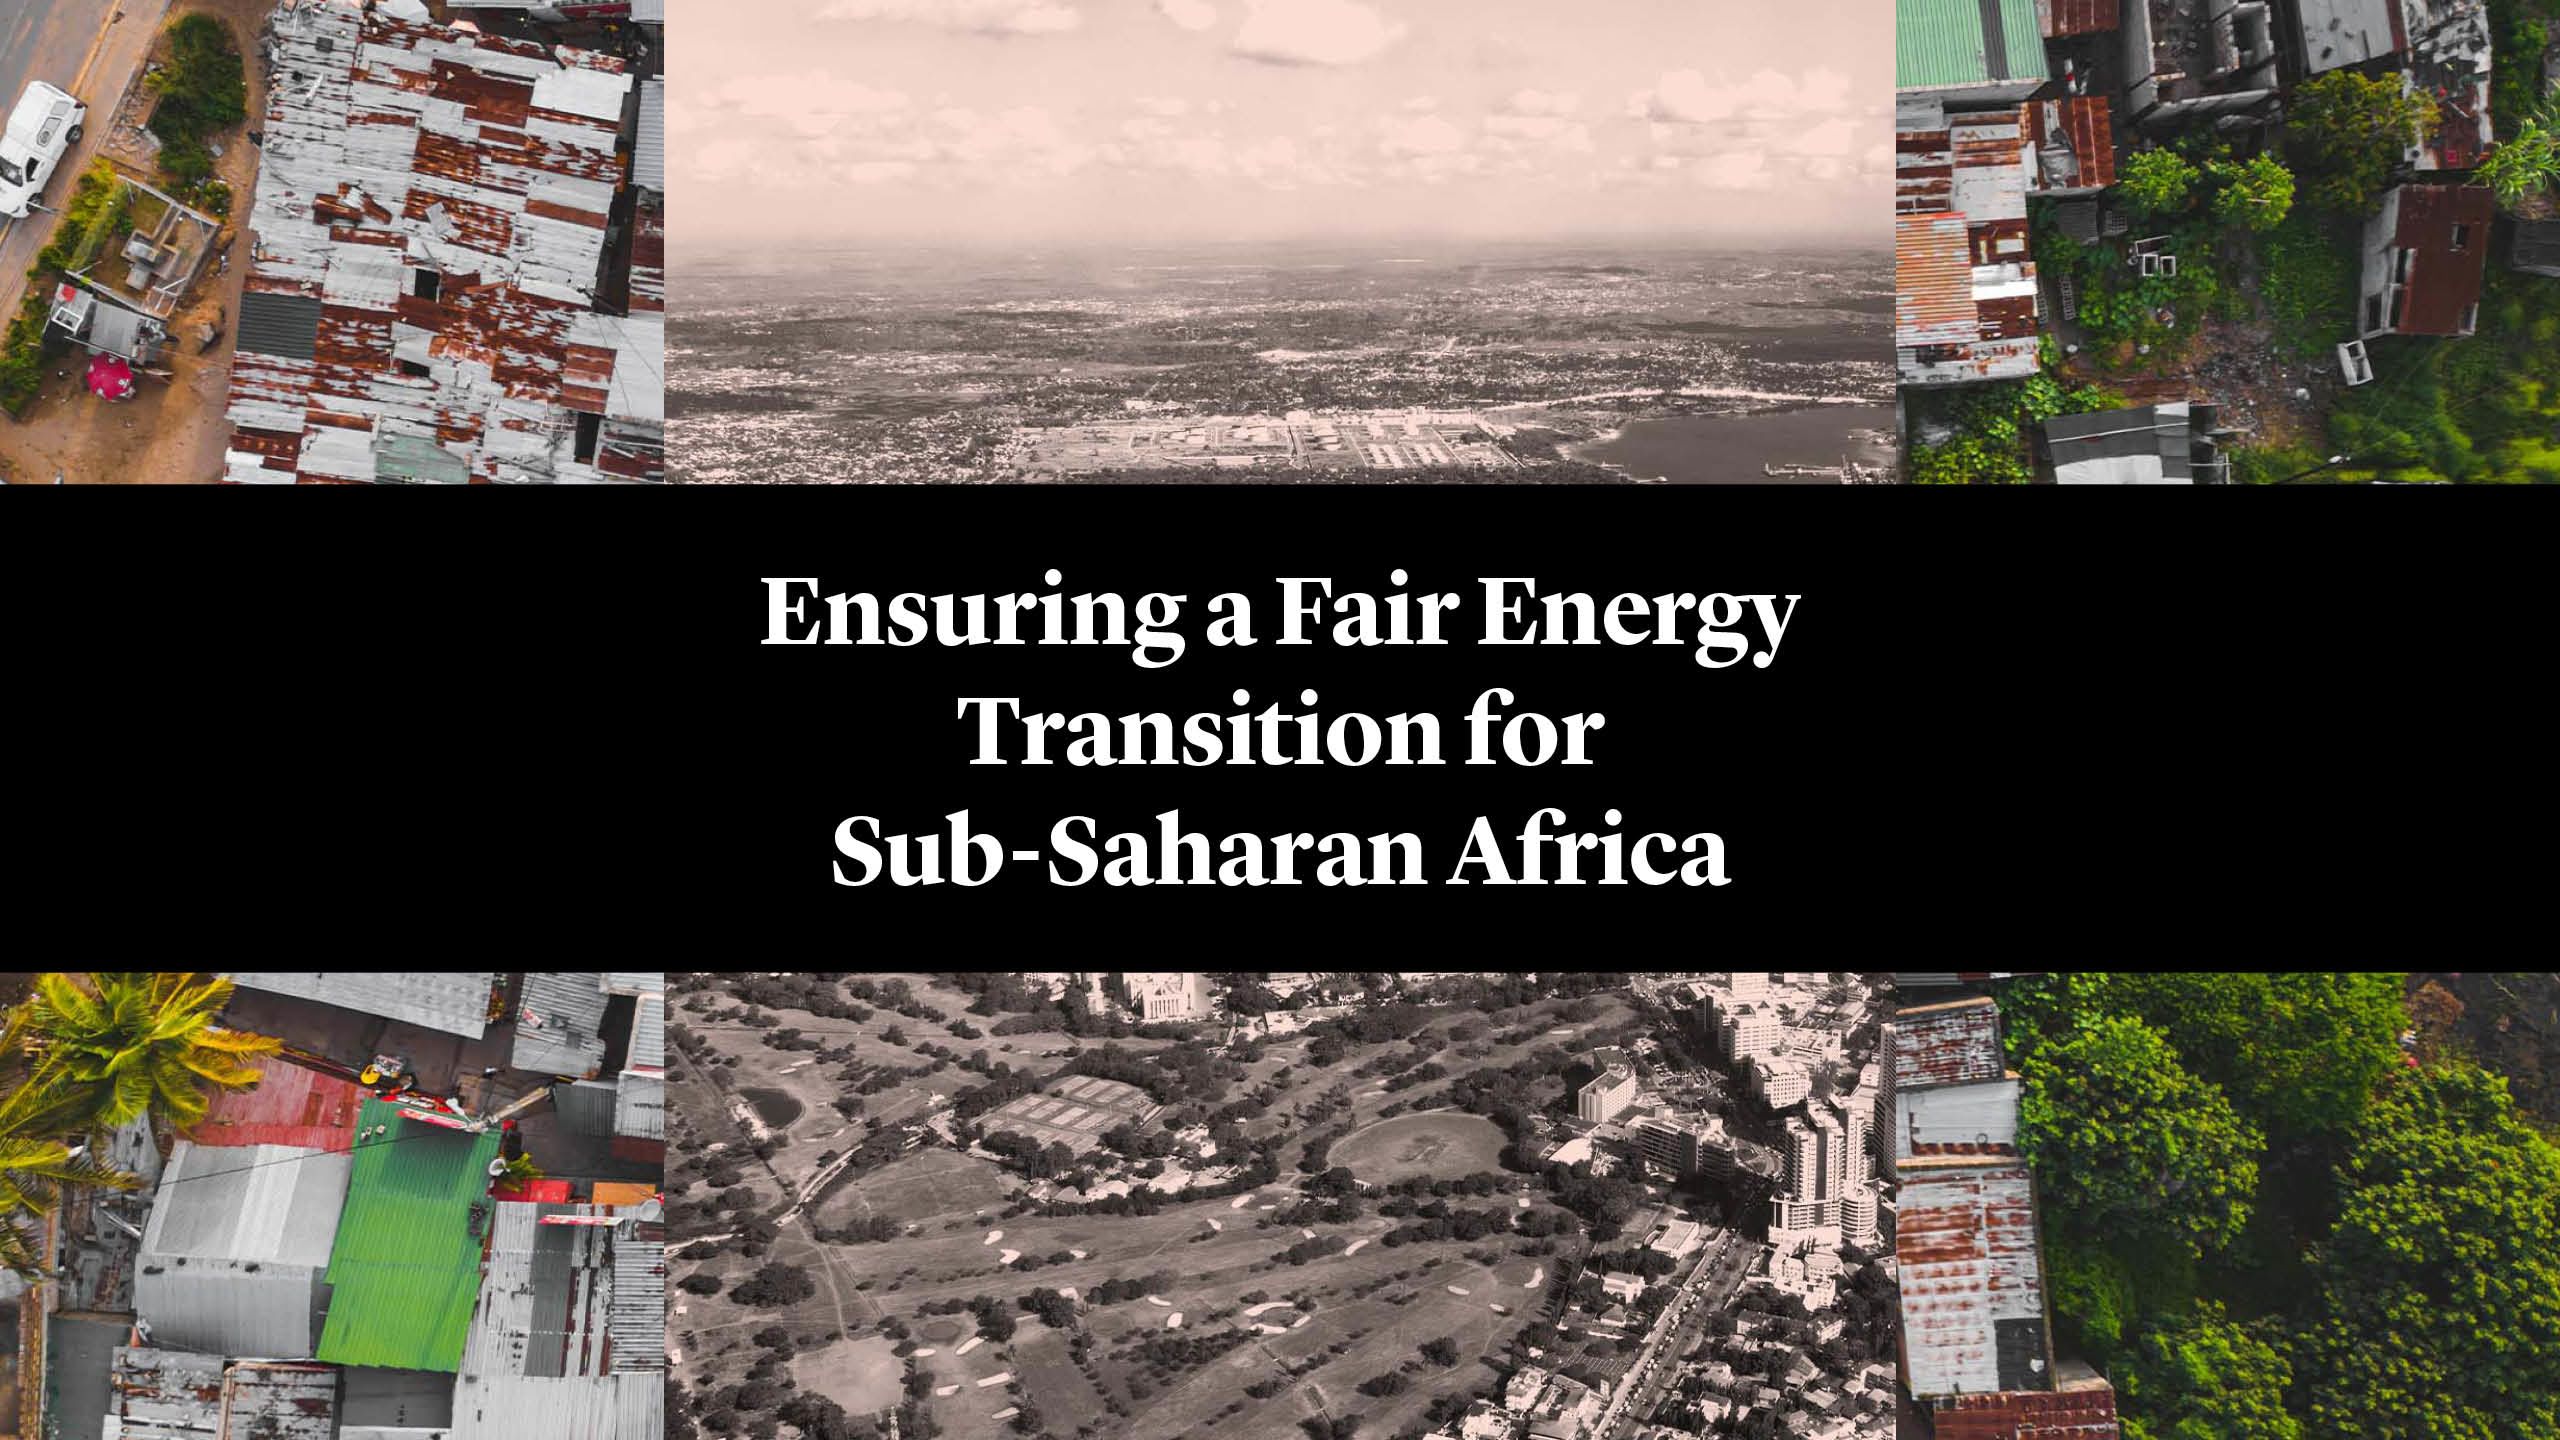  Ensuring a Fair Energy Transition for Sub-Saharan Africa